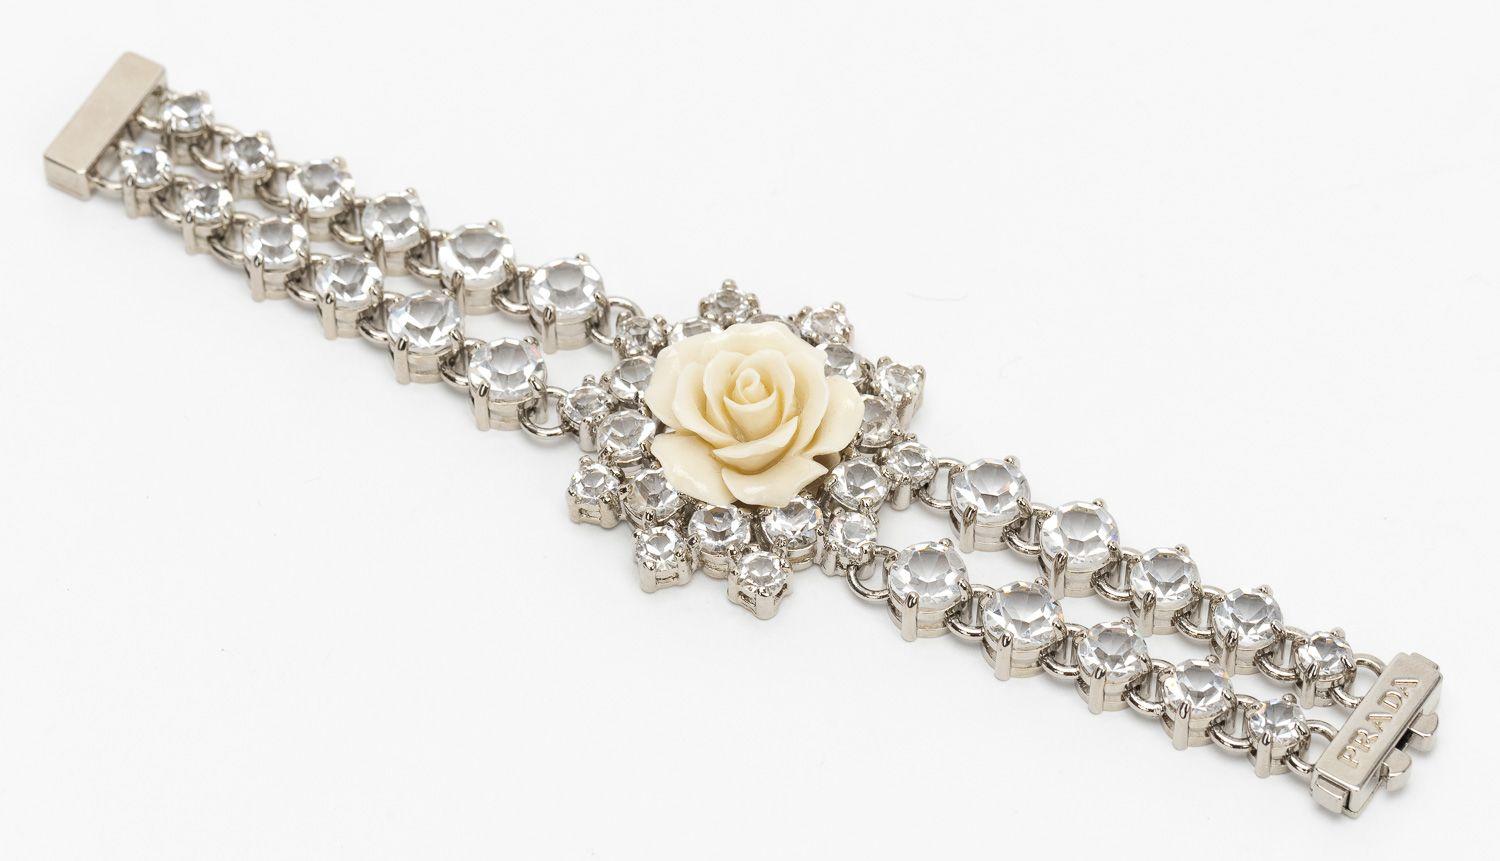 Cream rose & Swarovski crystal bracelet. SILVER CLASP. From the Prada Resort 2012 campaign. Excellent condition. Size small.
Prada Cream Rose & Swarovski Crystal Bracelet-Resort Collection 2012